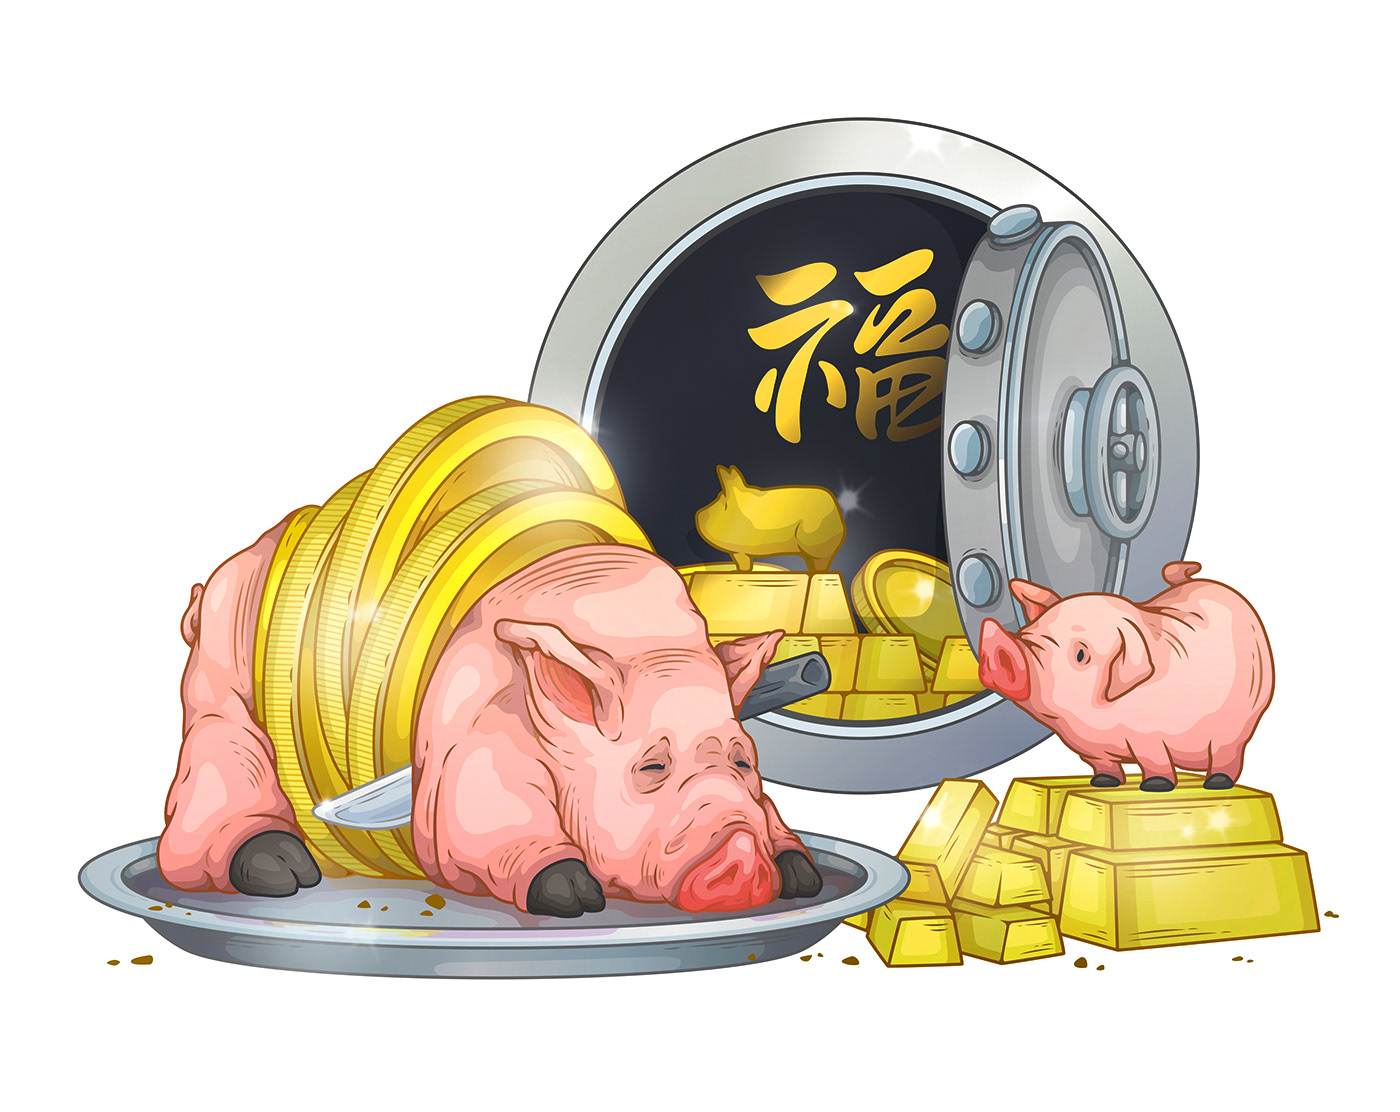 1000DAY pig gold Character money luck luckbag newyear